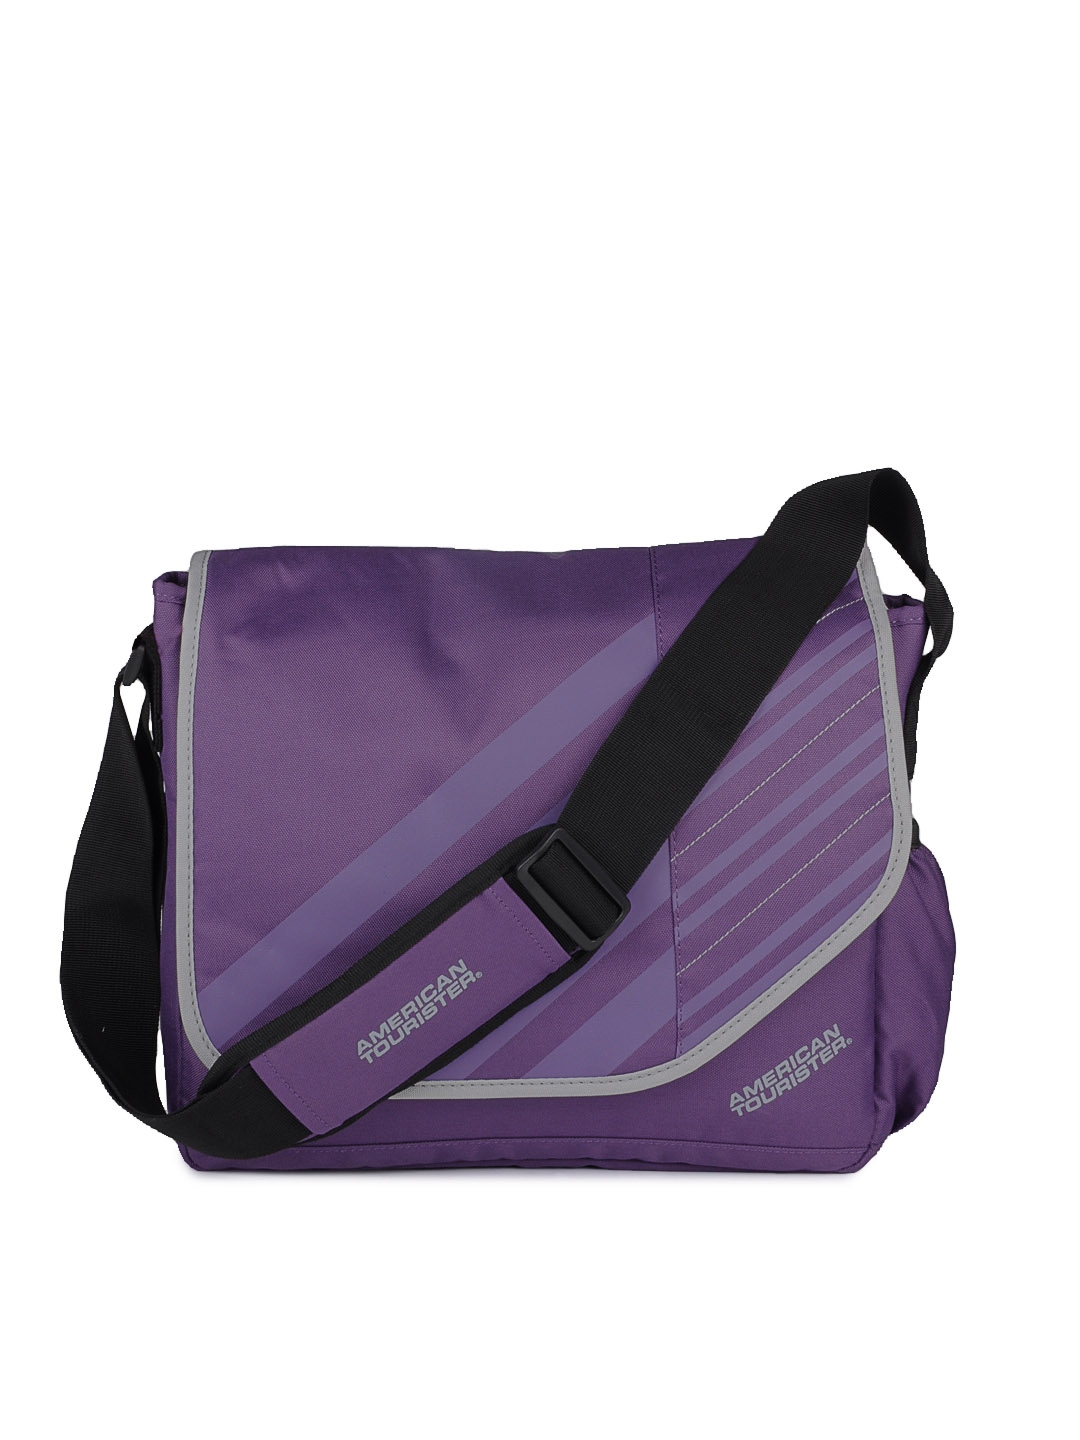 American Tourister Unisex Purple Messenger Bag